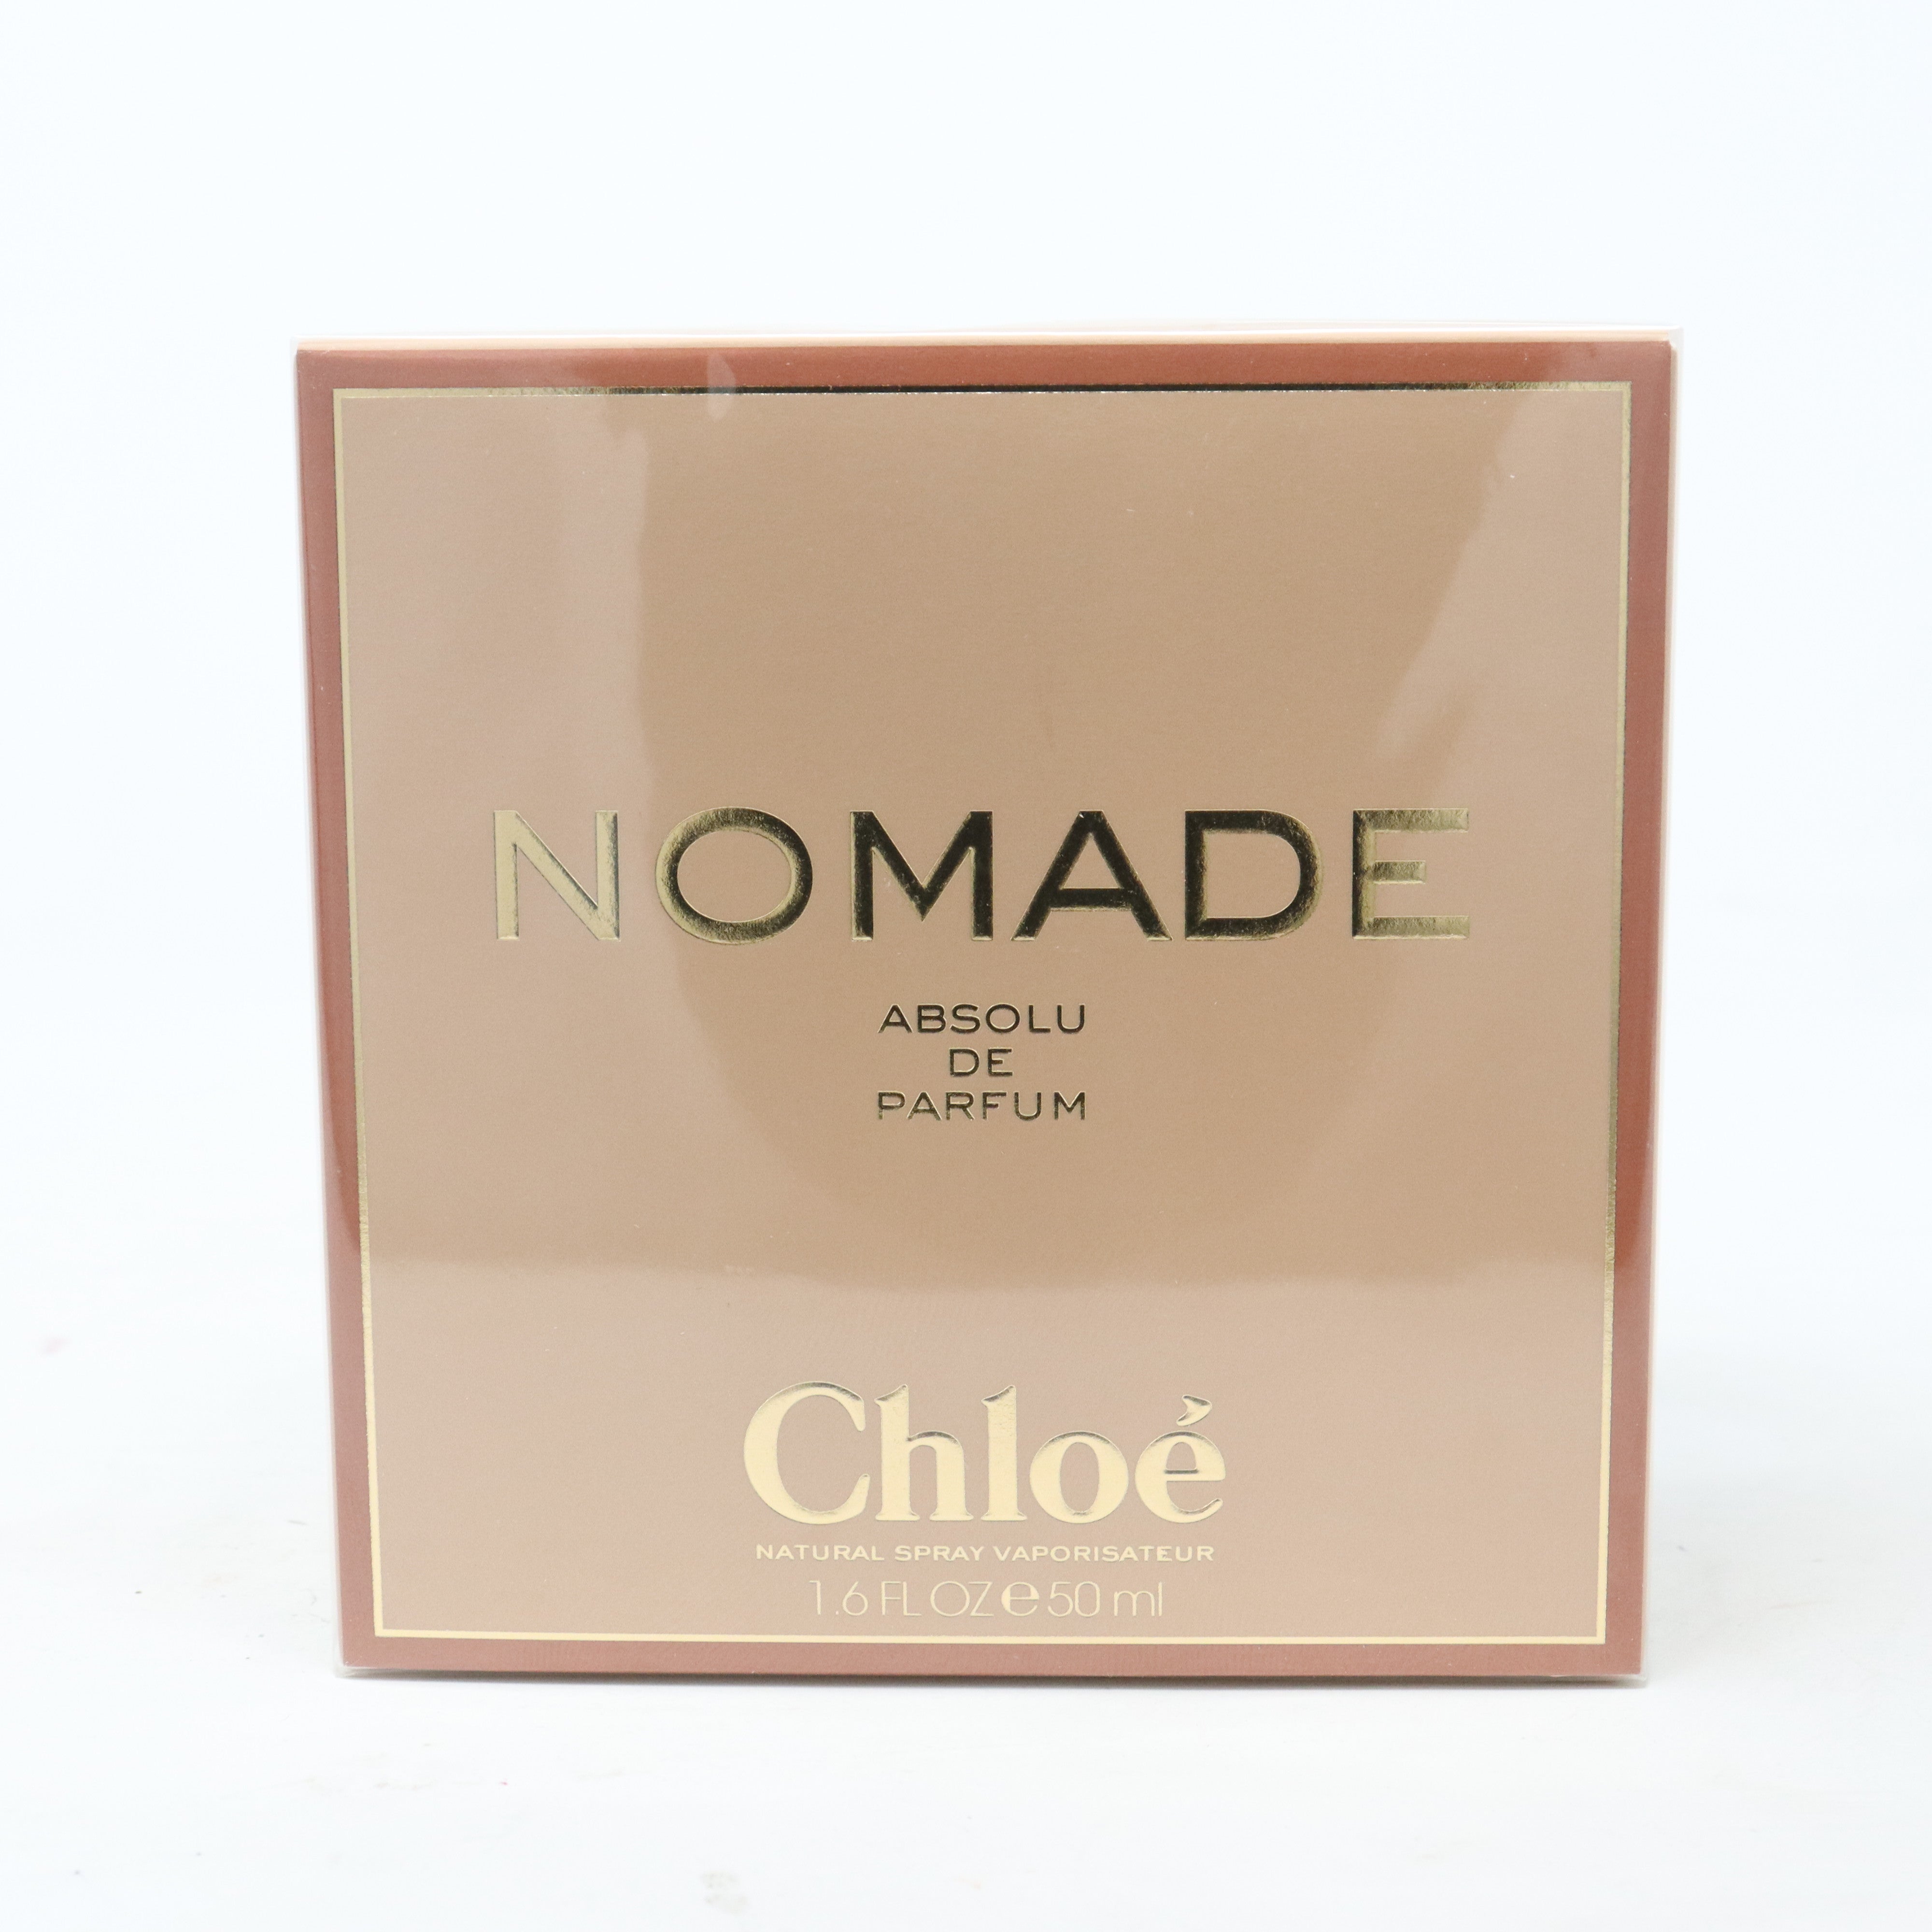 Chloe Nomade Absolu De Parfum 1.6 oz / 50 ml Spray 3614227548640